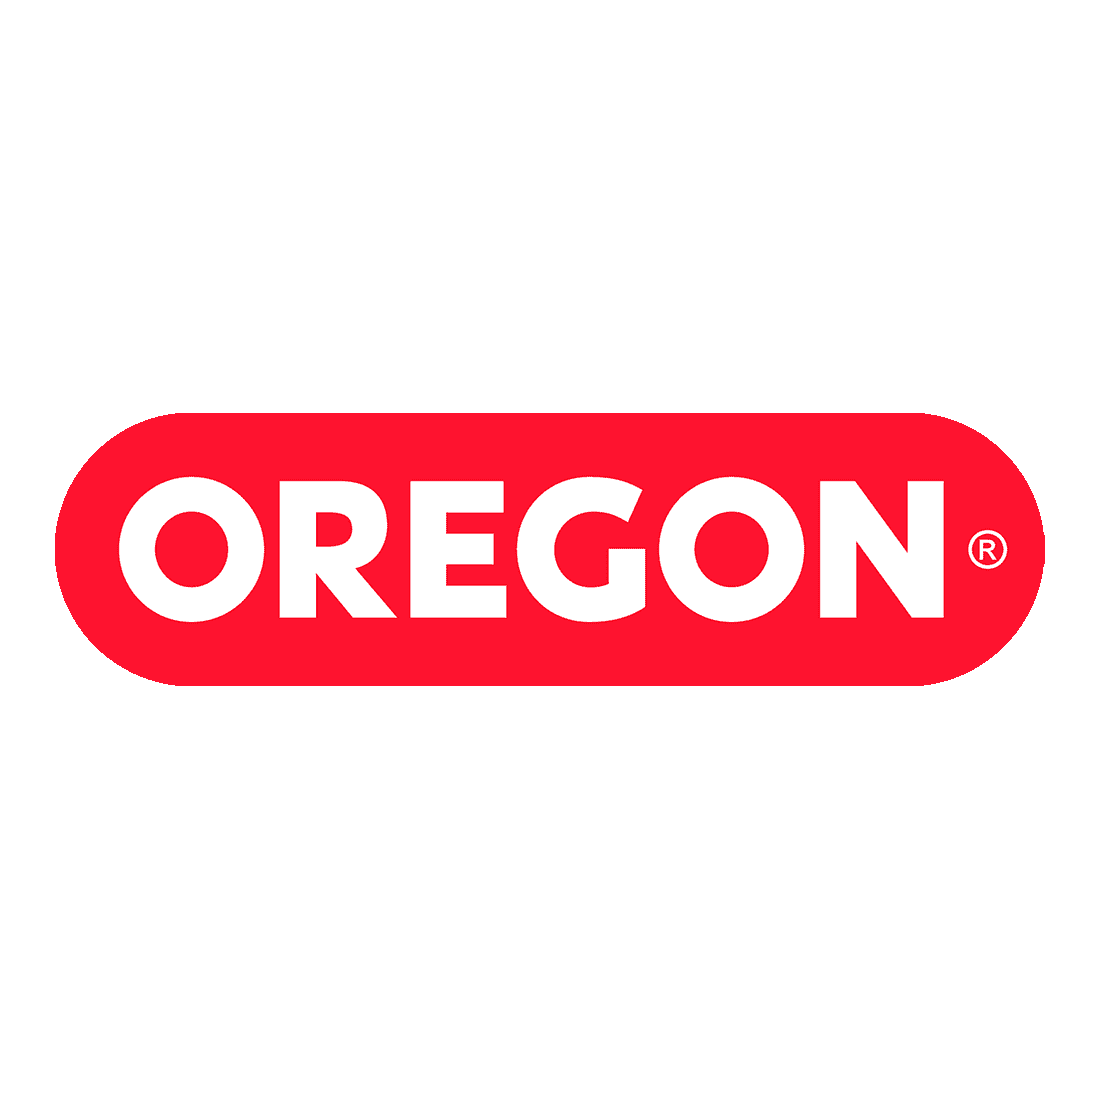 Oregon OR4125-18A Grinding Wheel 4 1/8 x 1/8 